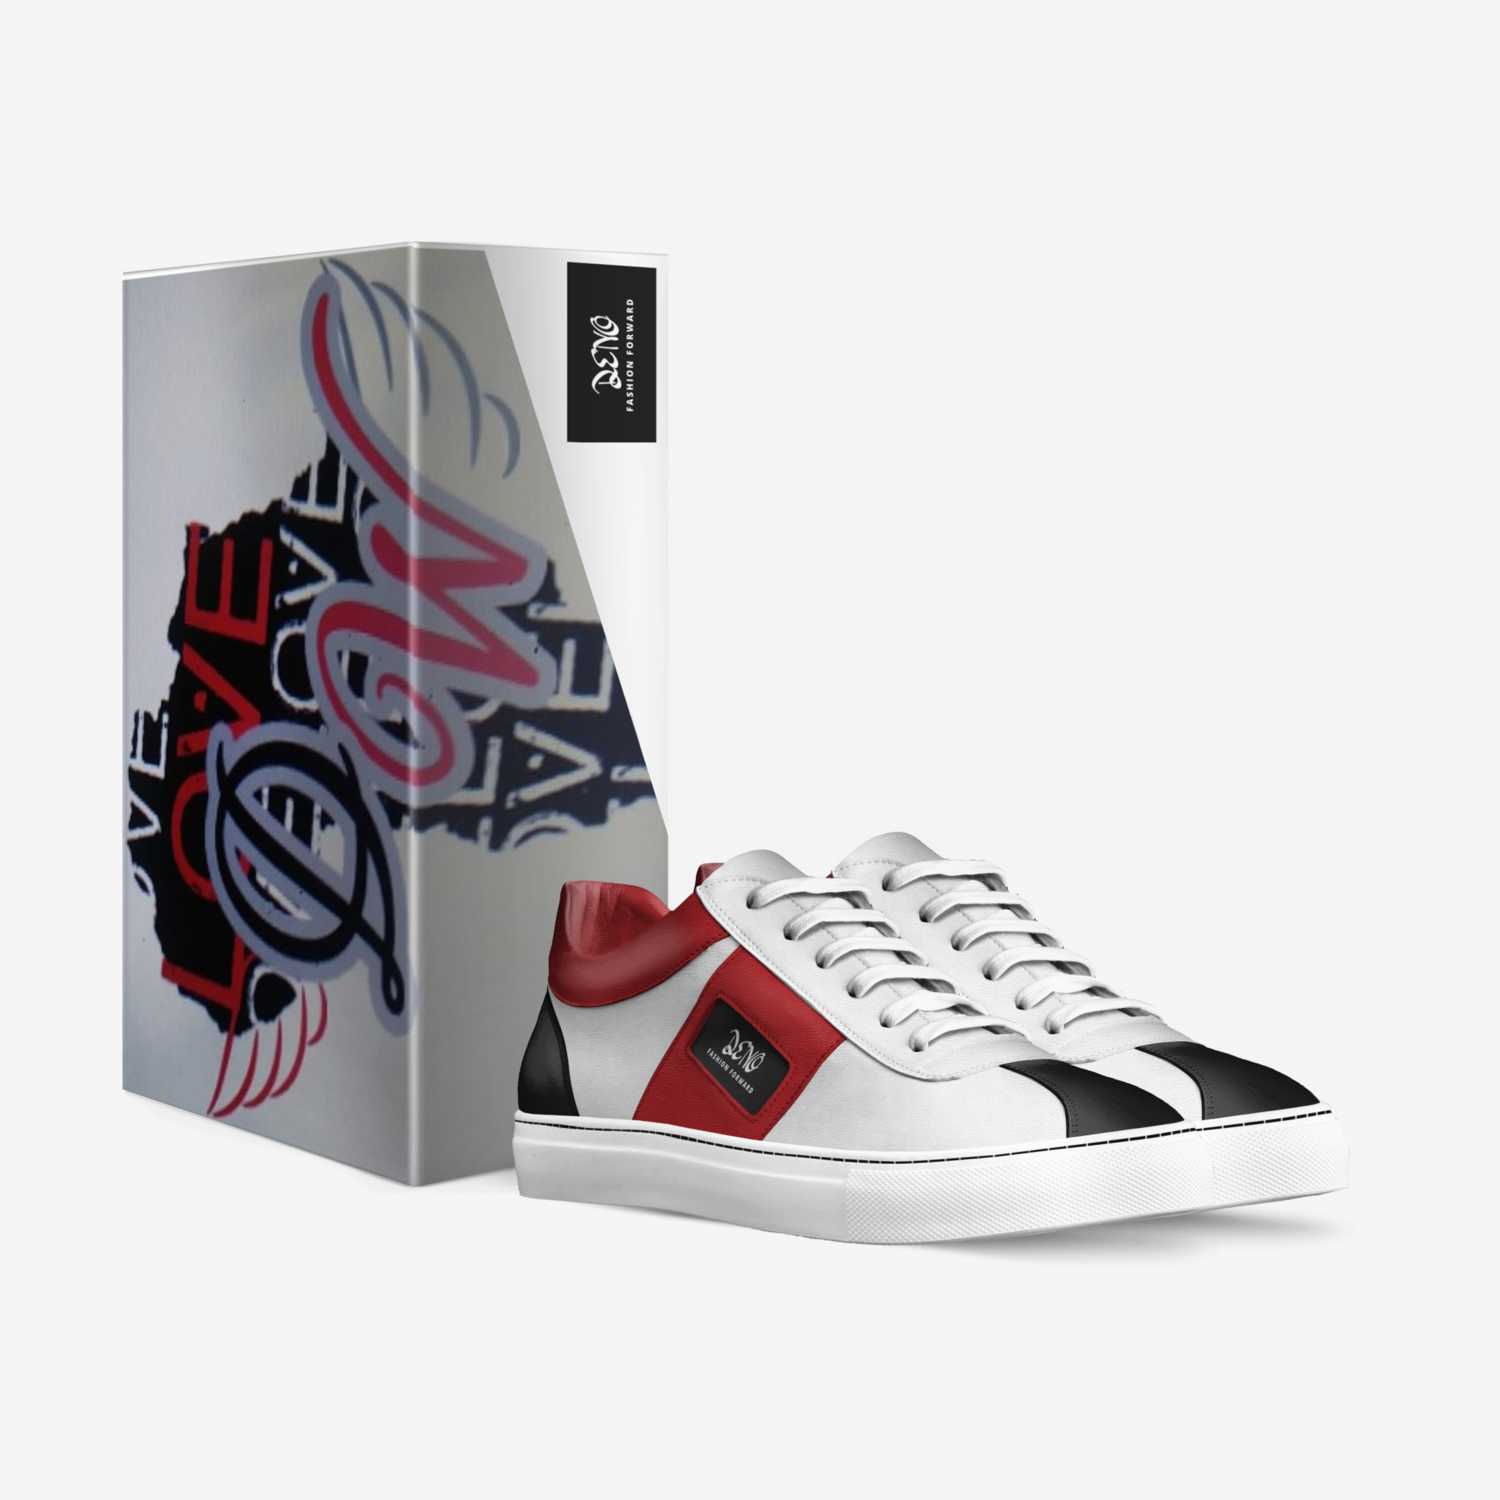 DENO custom made in Italy shoes by Melissa Garrett | Box view